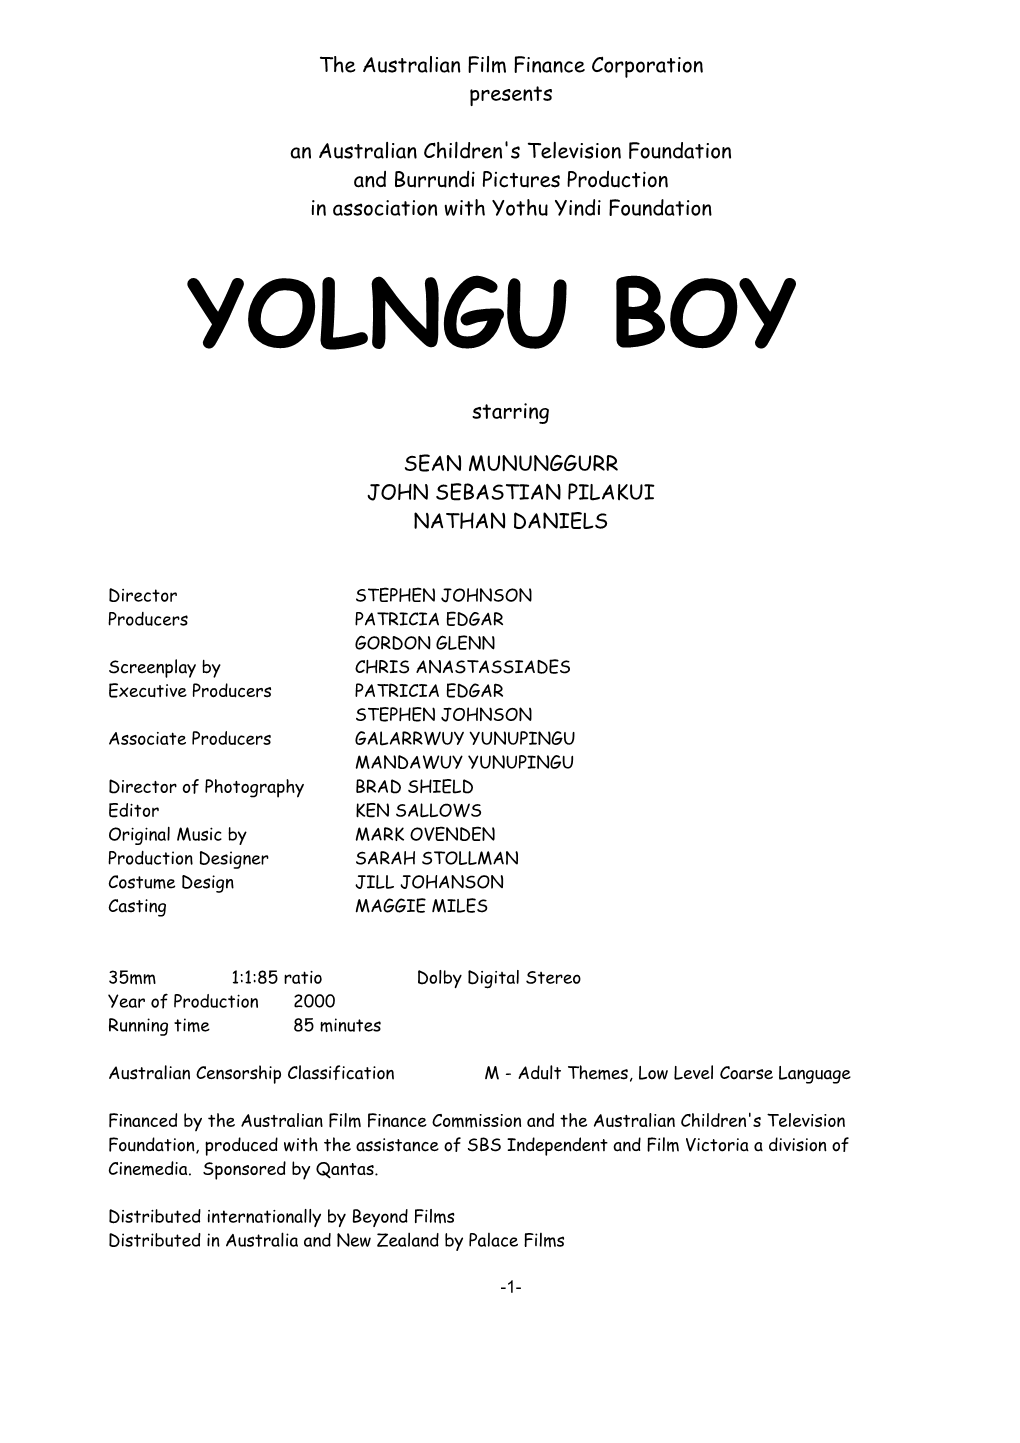 Yolngu Boy Media